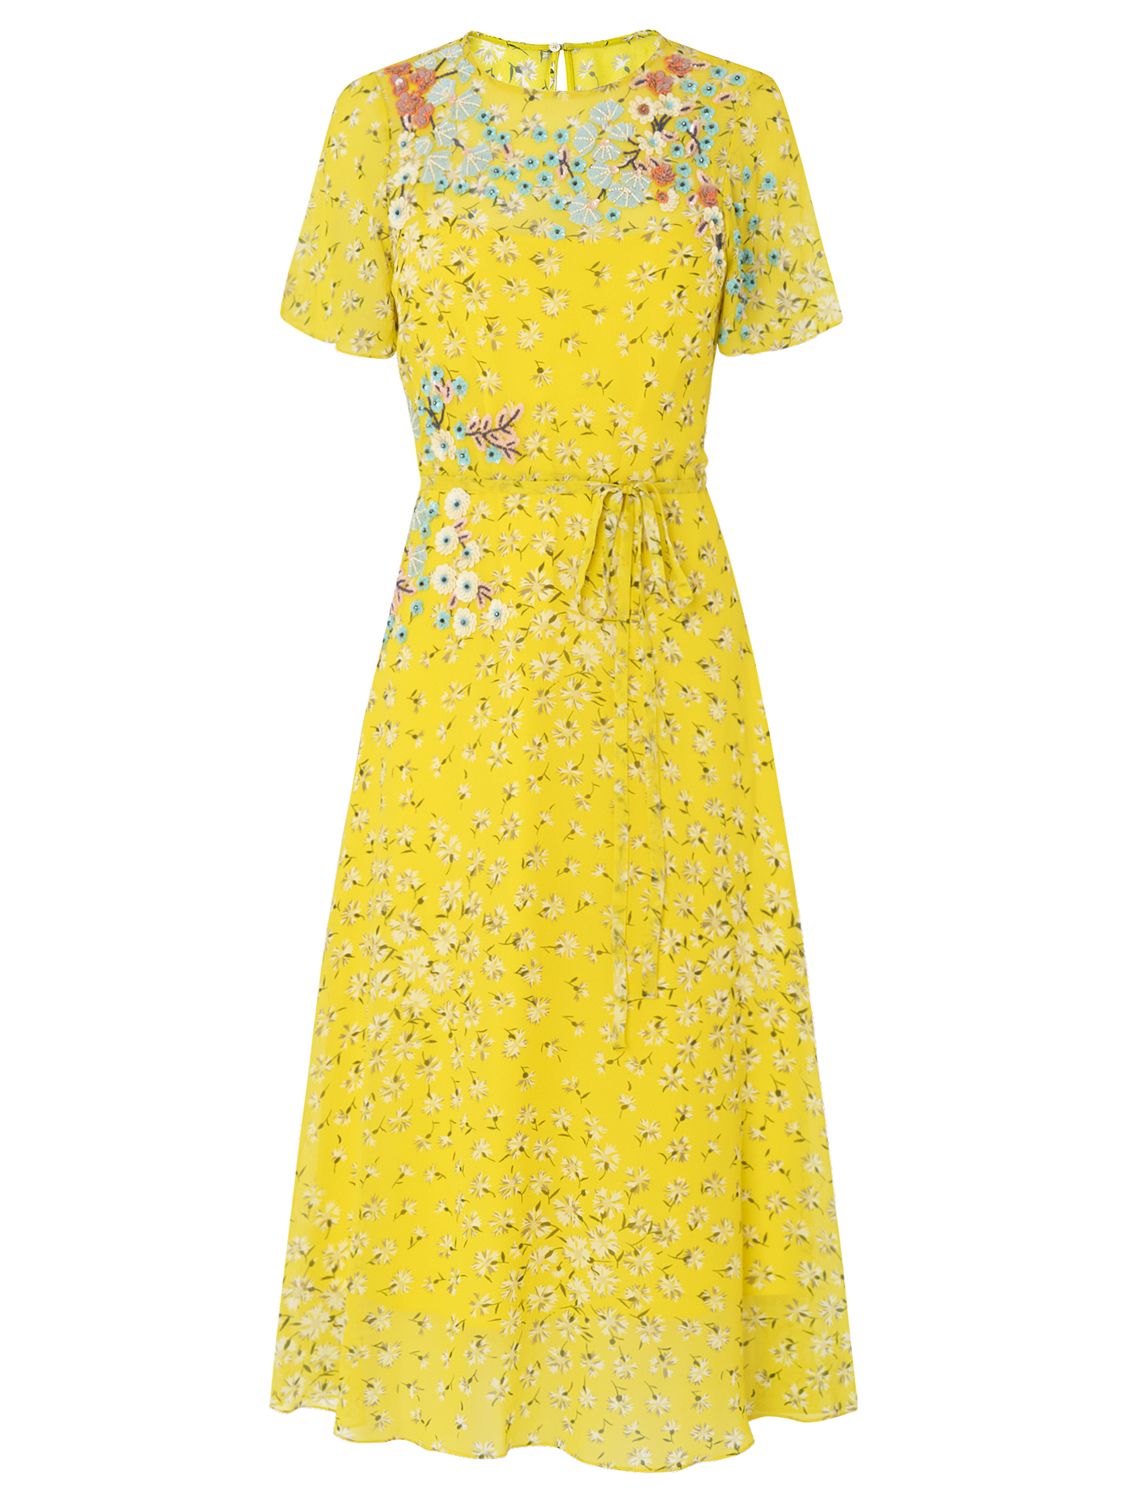 L K Bennett Lela Silk Dress Yellow At John Lewis Partners